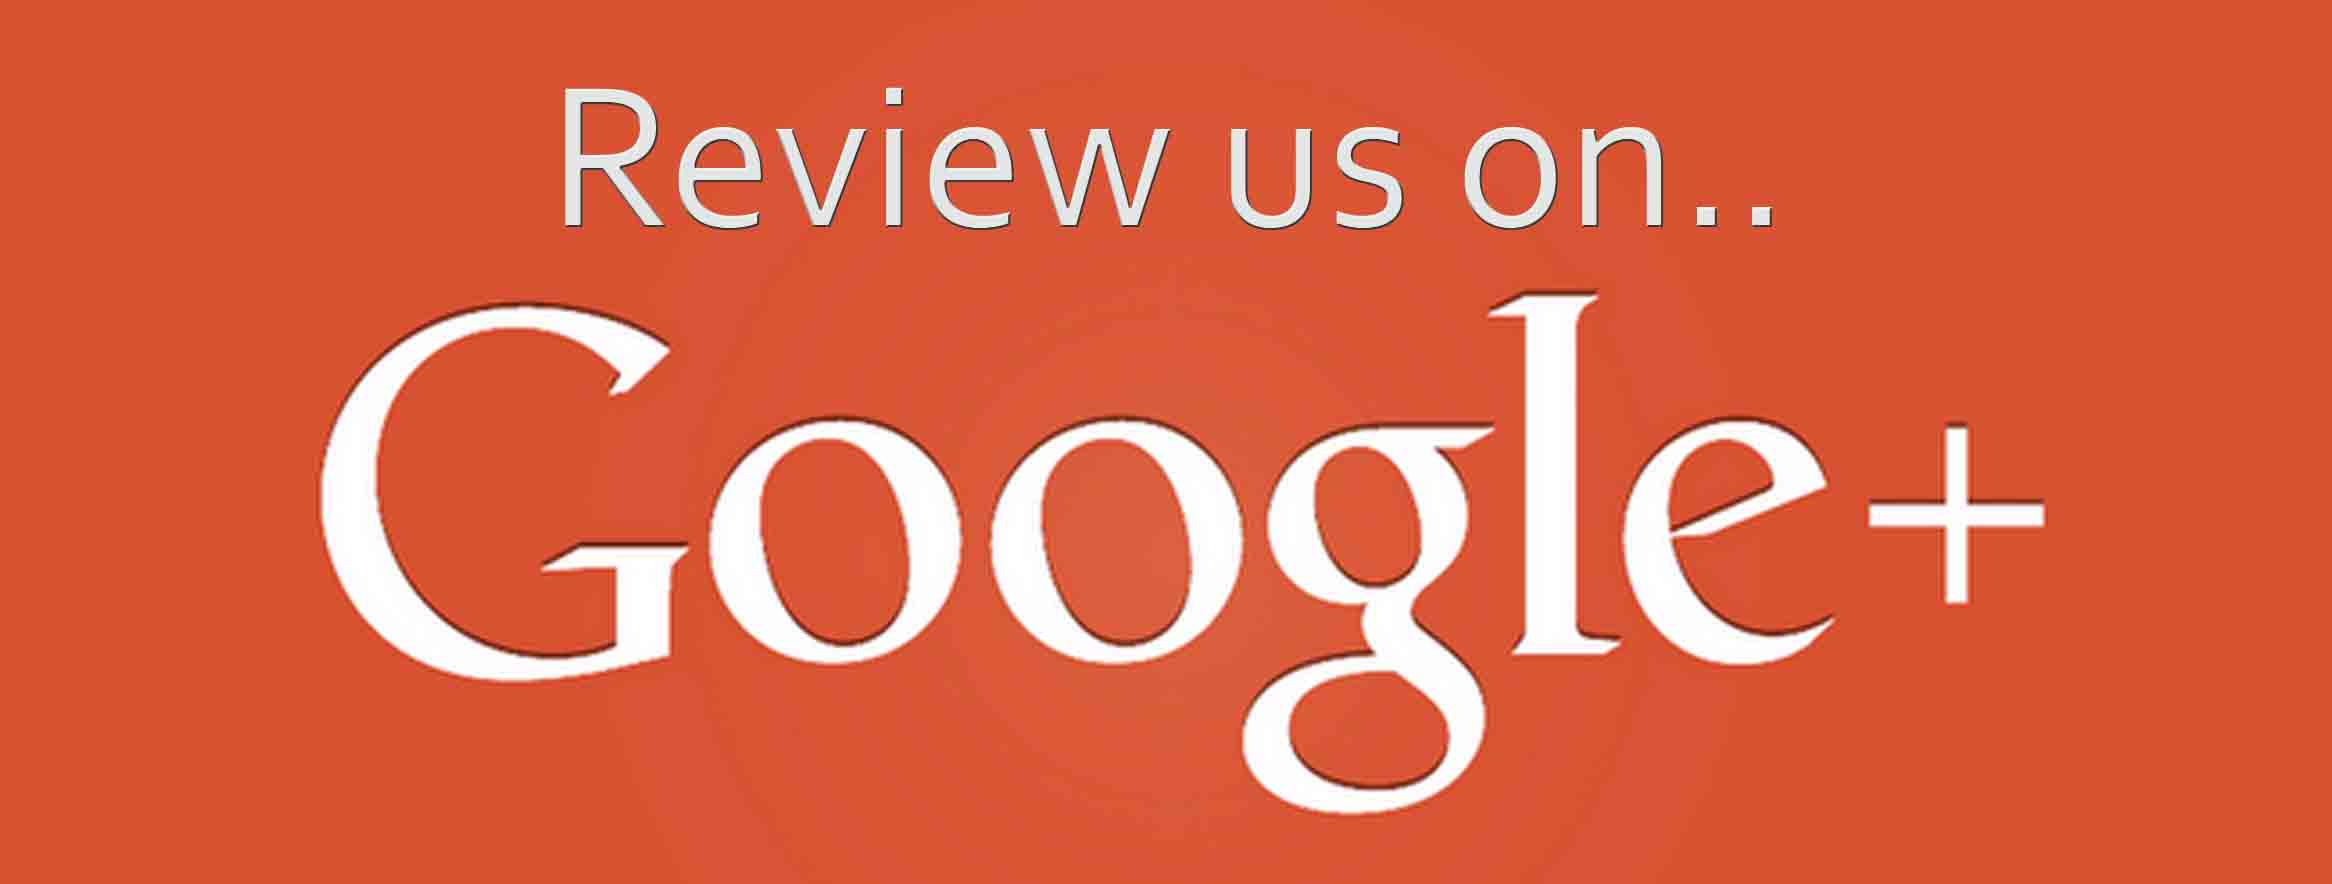 Ggole Plus Review Logo - Review-us-on-google-plus | Gonzales Roofing